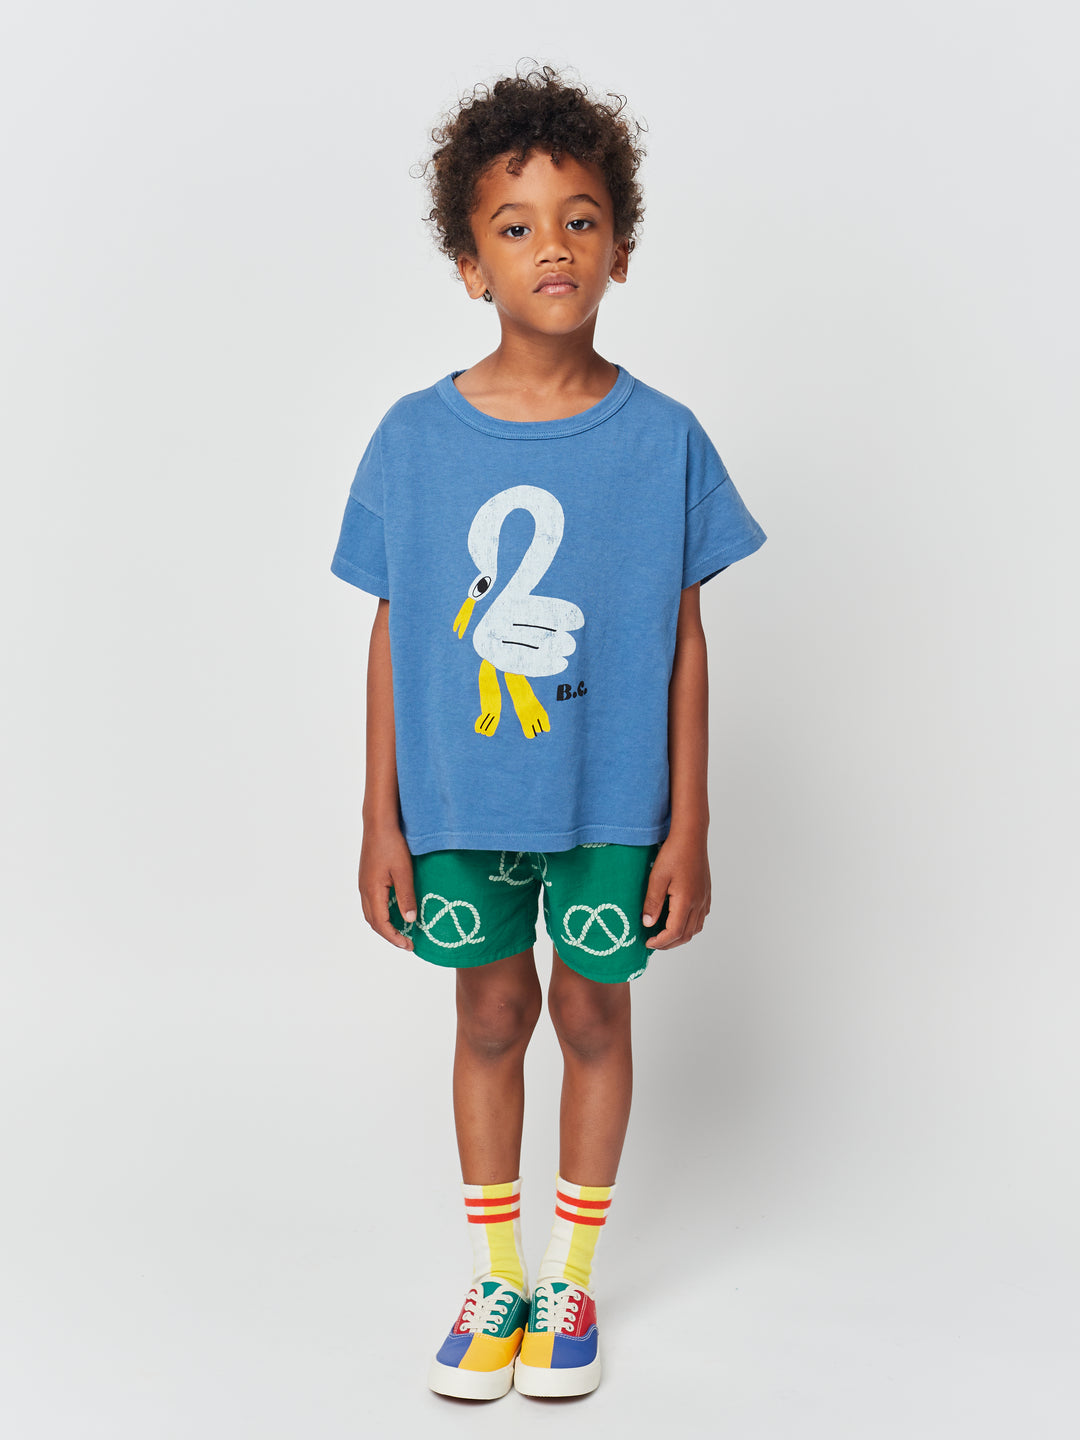 Garçon avec Enfant avec T-shirt bleu avec Pelican